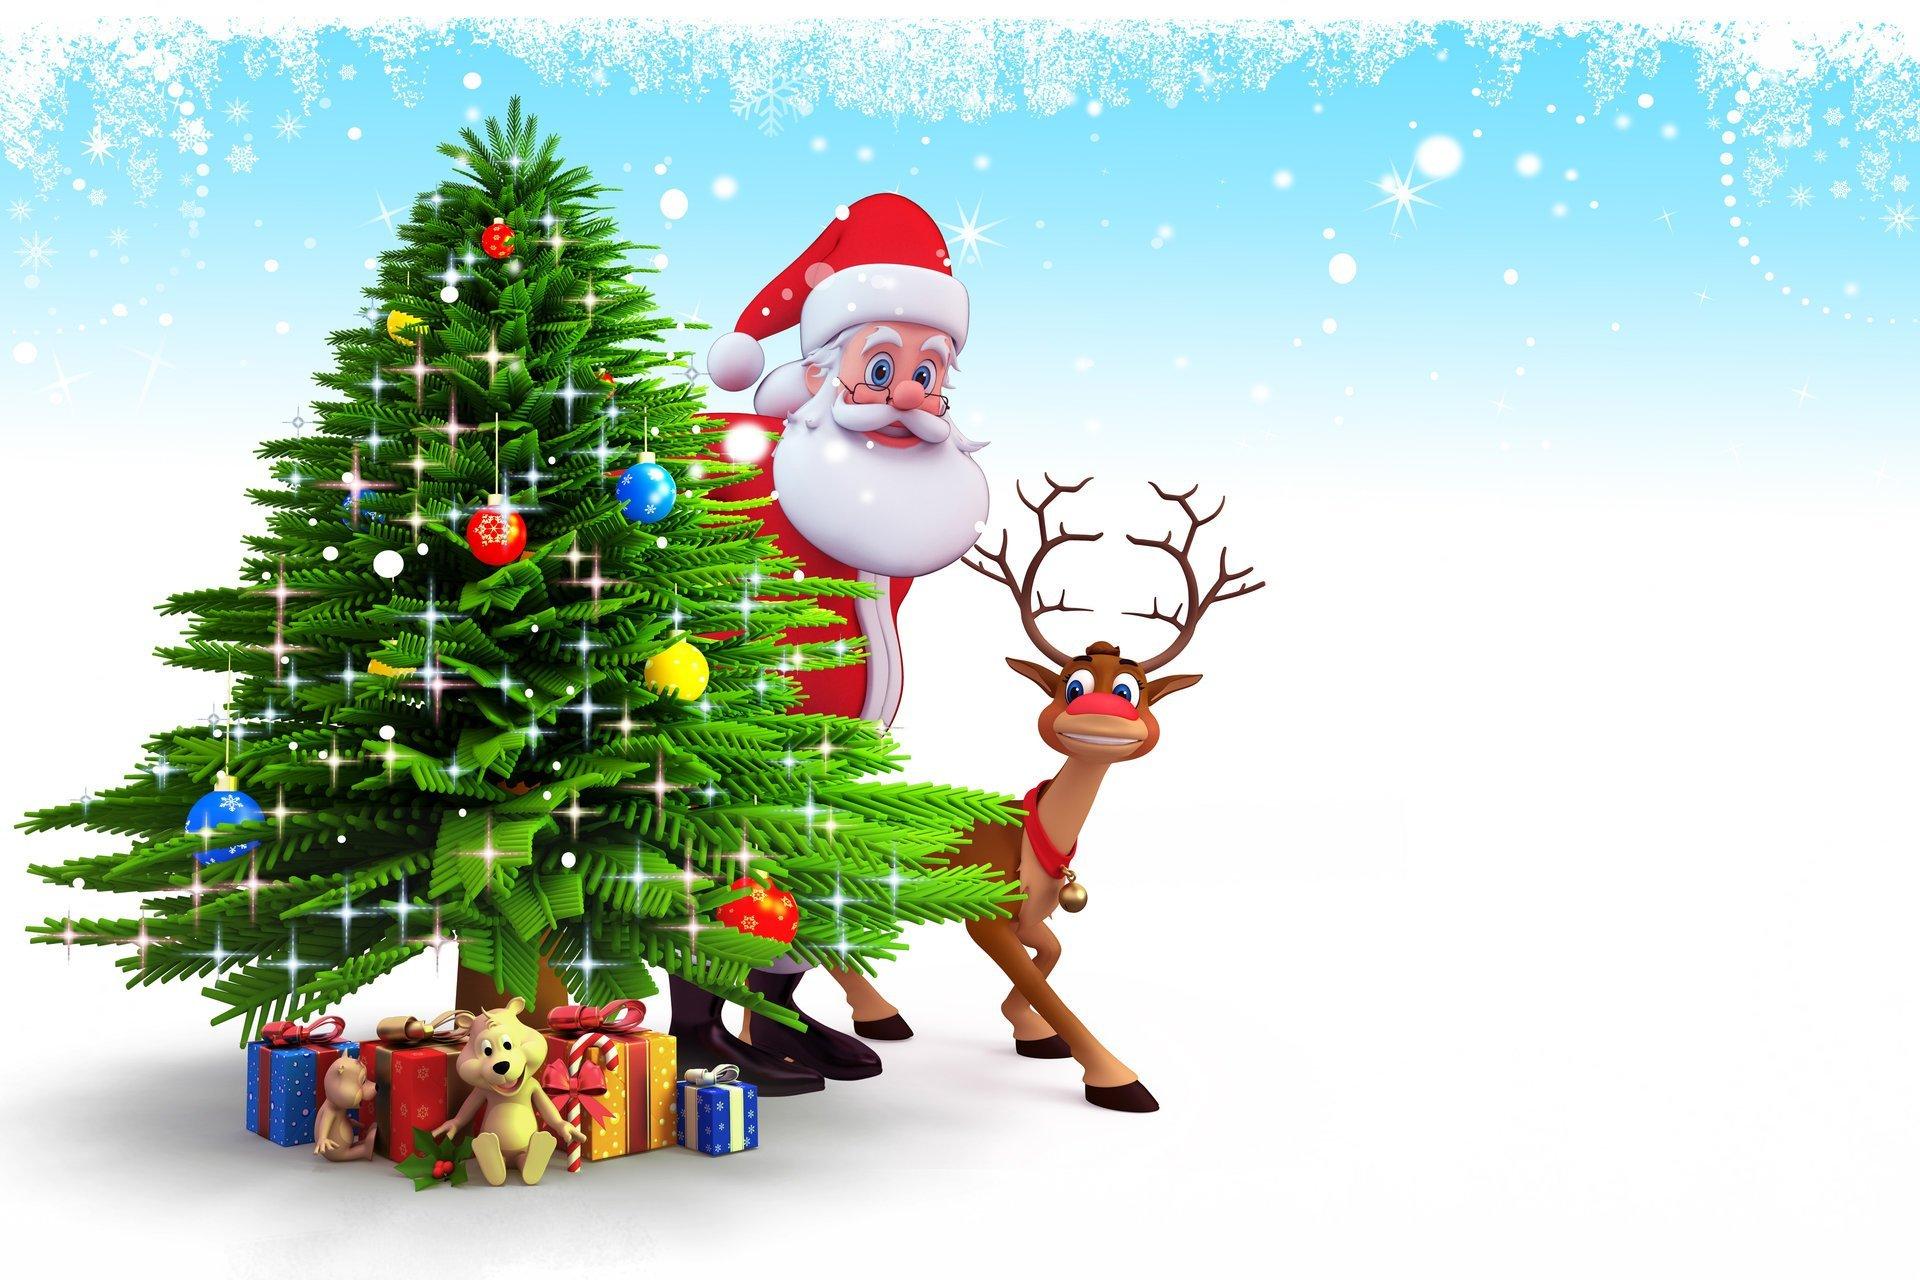 Santa Claus Christmas wallpaper for Desktop and Mobile